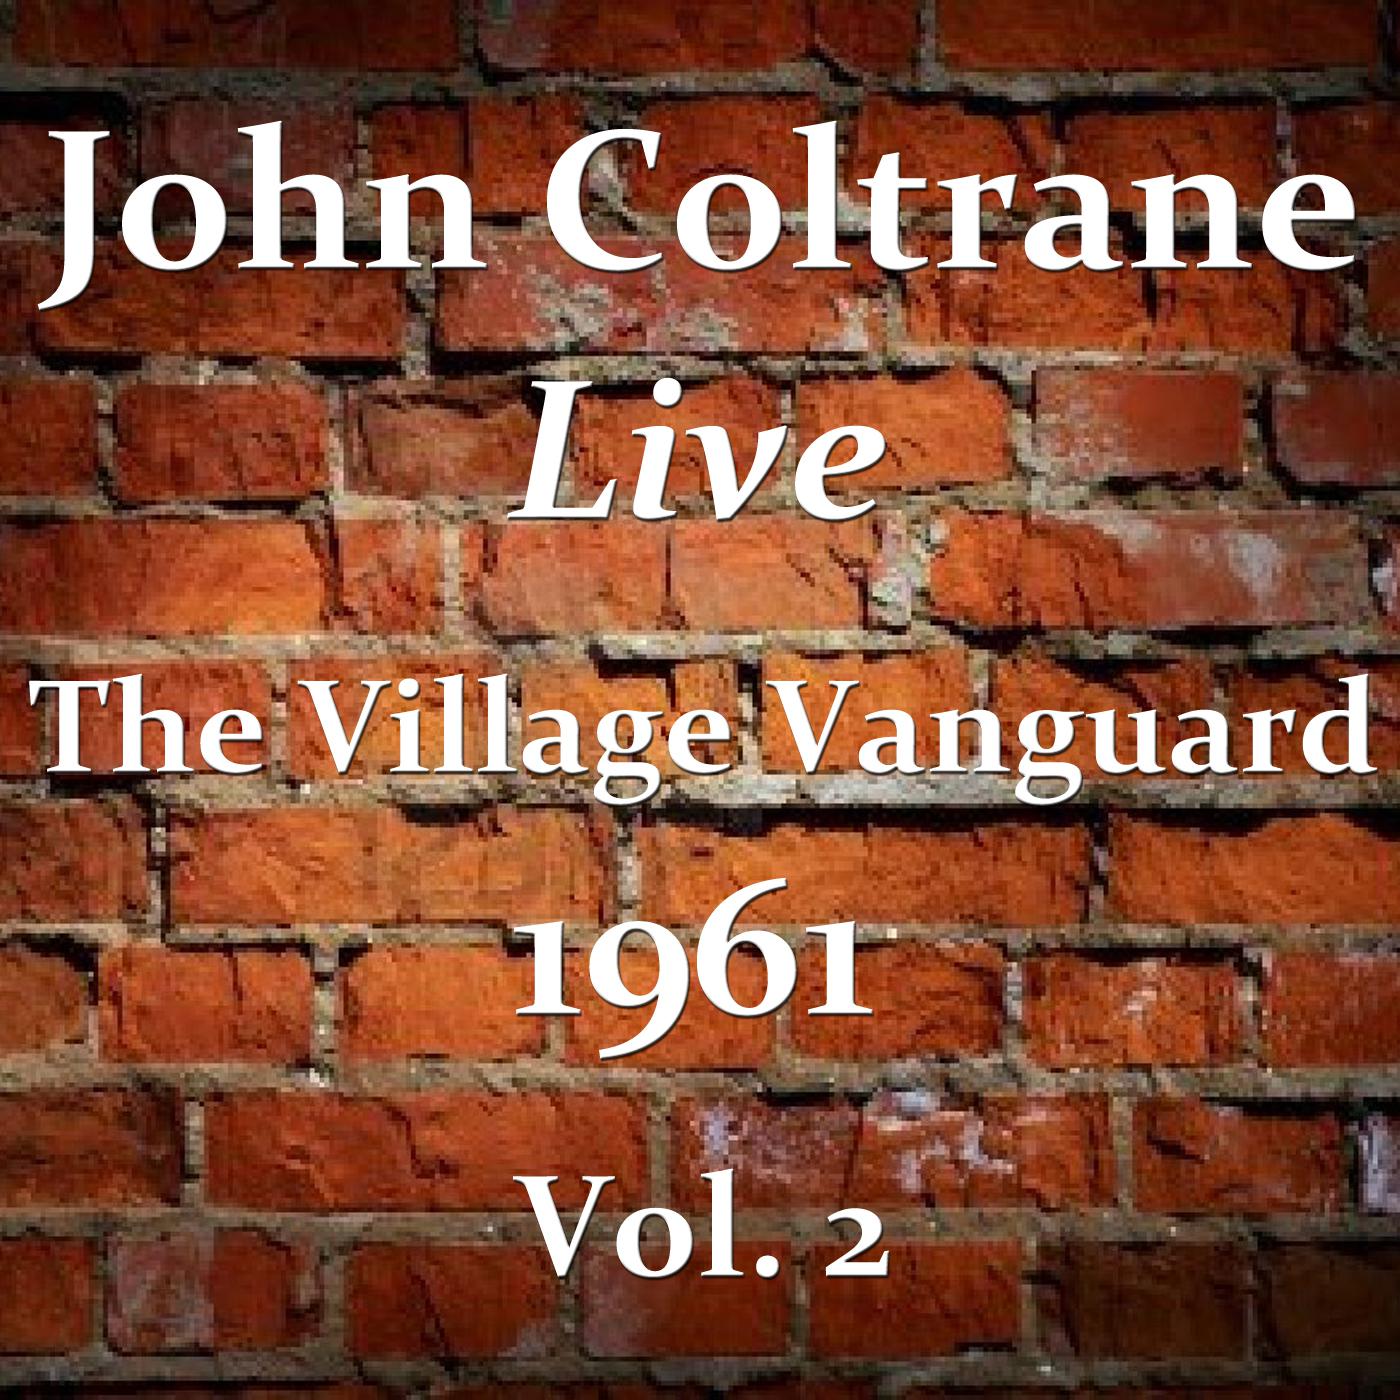 The Village Vanguard 1961 Vol. 2 (Live)